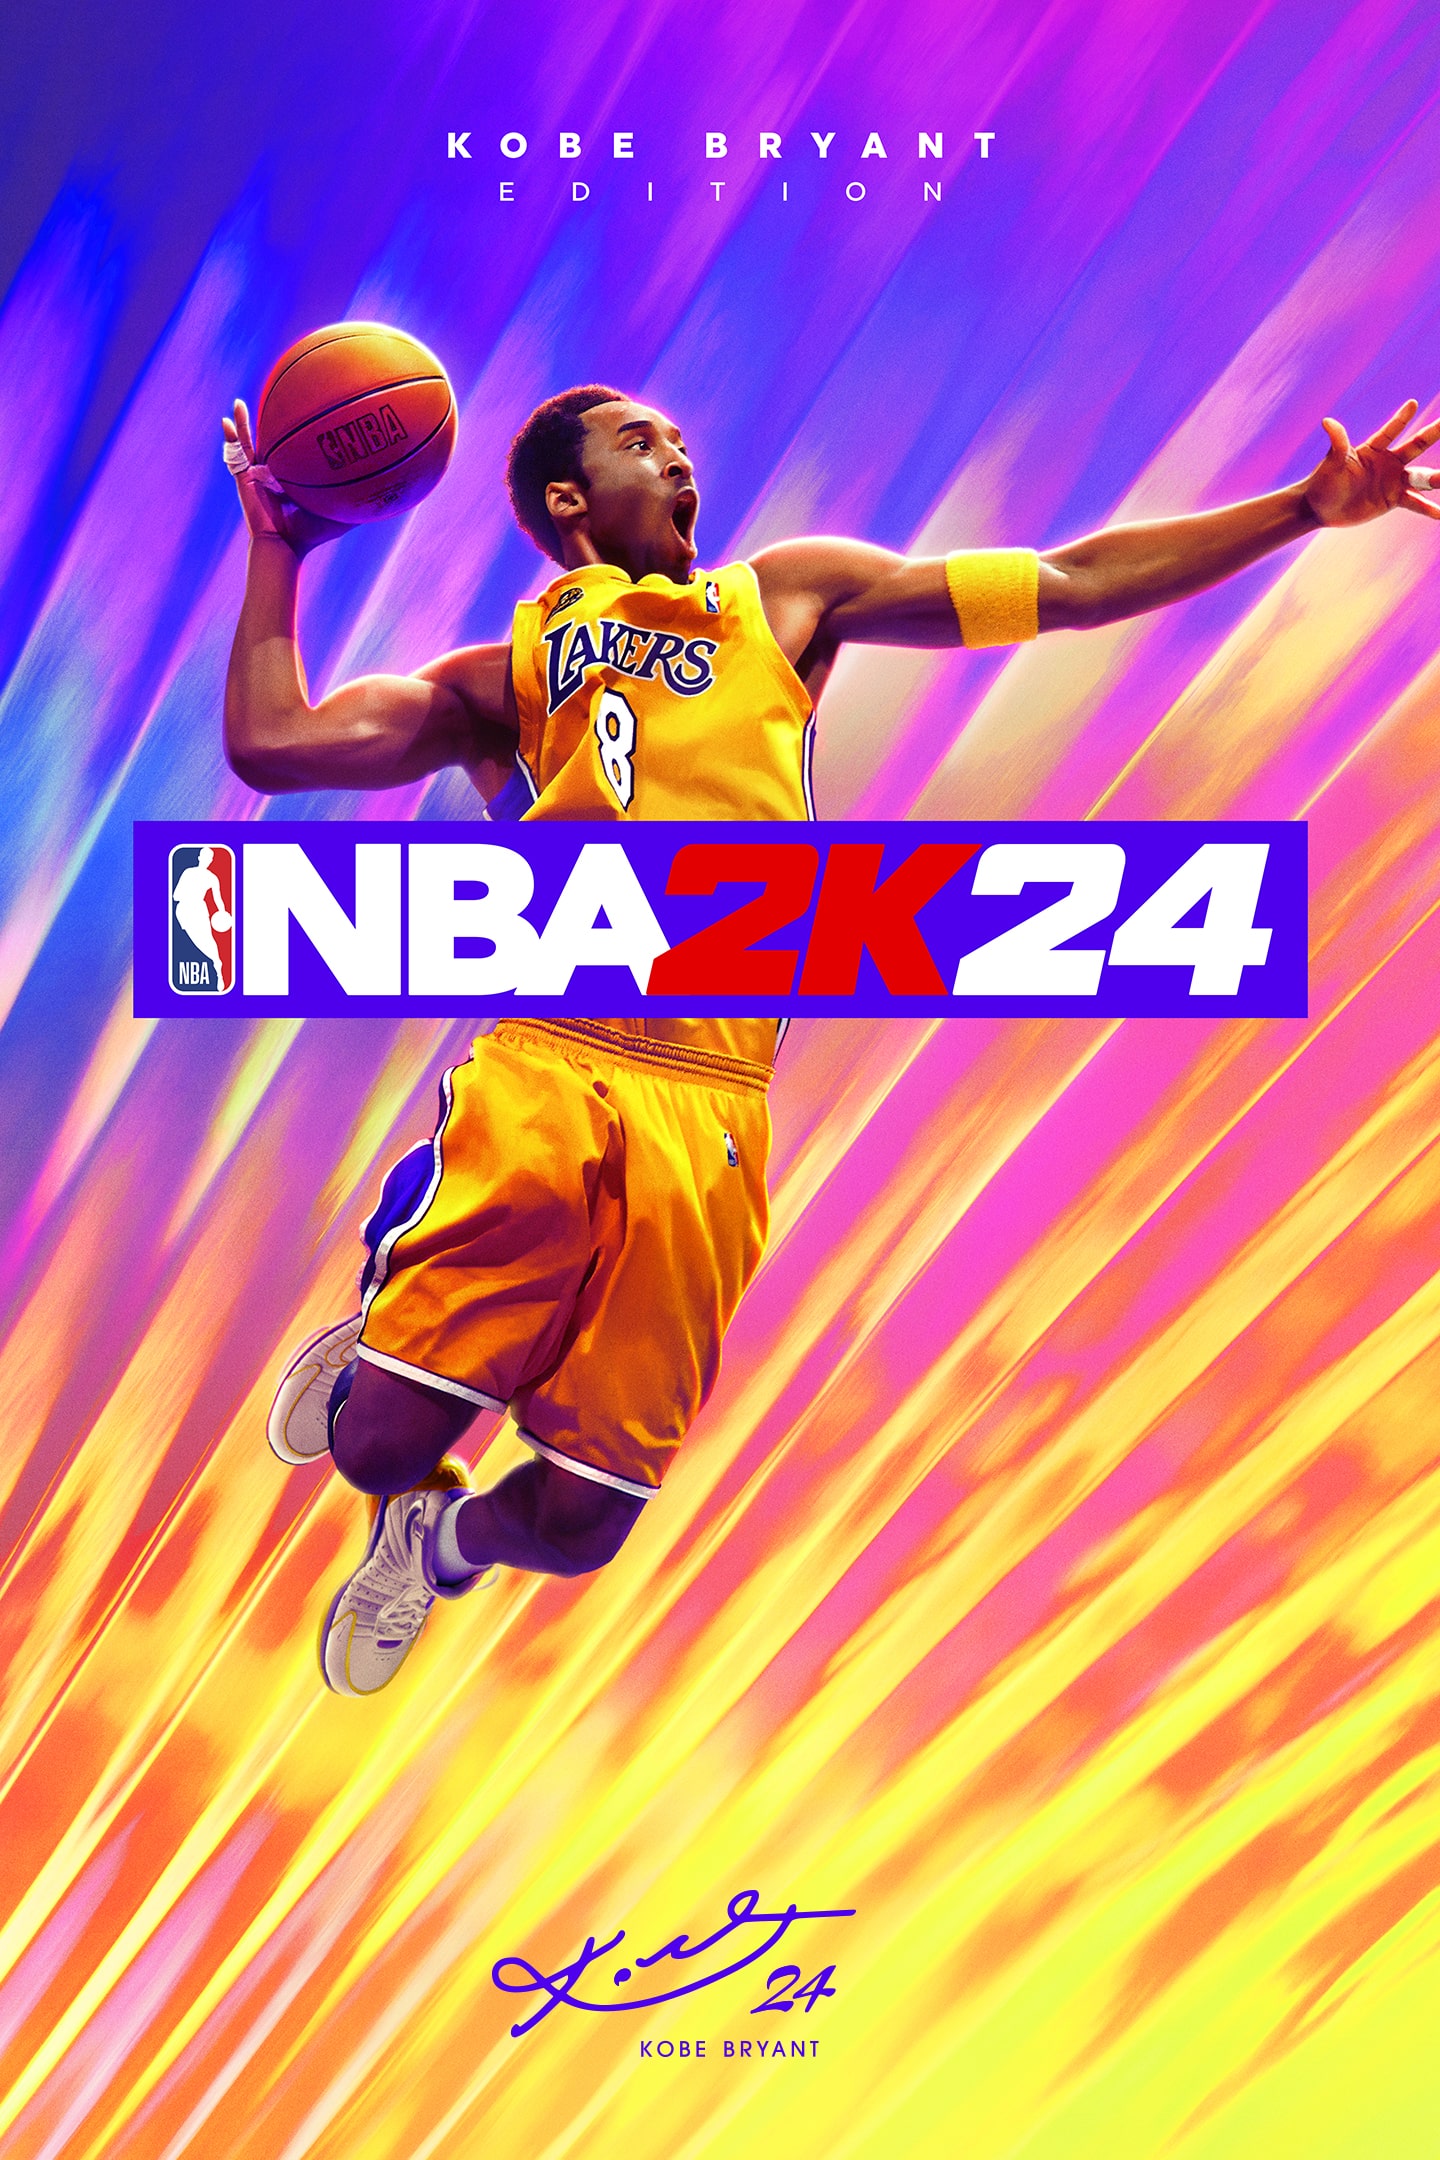 Jogo NBA 2K24 PS5 Mídia Física - Playstation - Case Plus